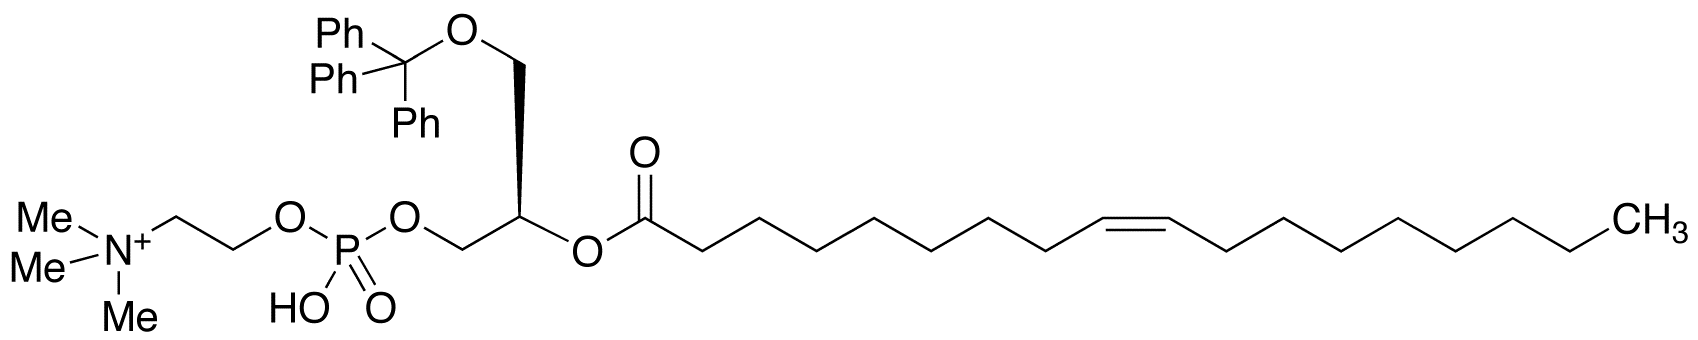 [R-(Z)]-4-Hydroxy-N,N,N-trimethyl-9-oxo-7-[(triphenylmethoxy)methyl]-3,5,8-trioxa-4-phosphahexacos-17-en-1-aminium 4-Oxide Inner Salt